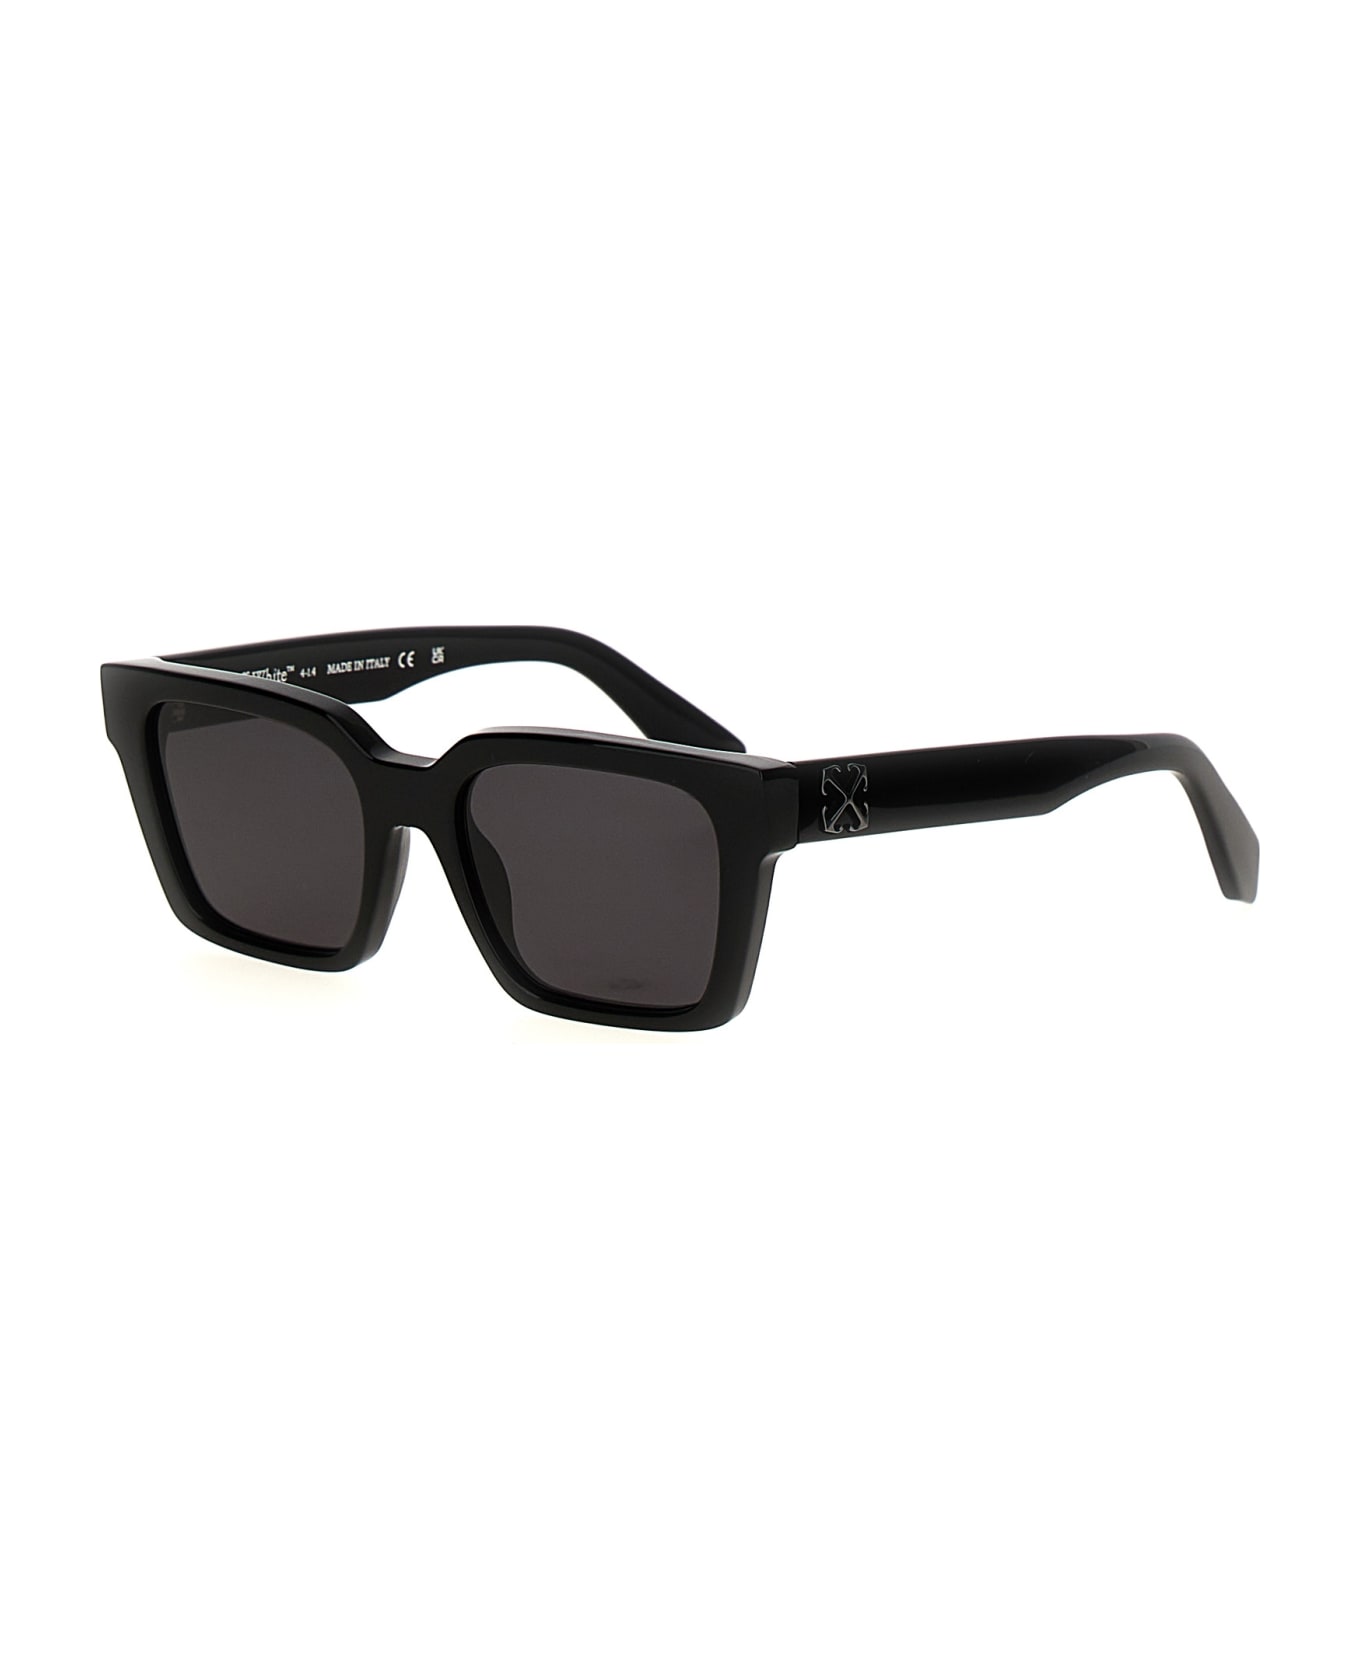 Off-White 'branson' Sunglasses - Black